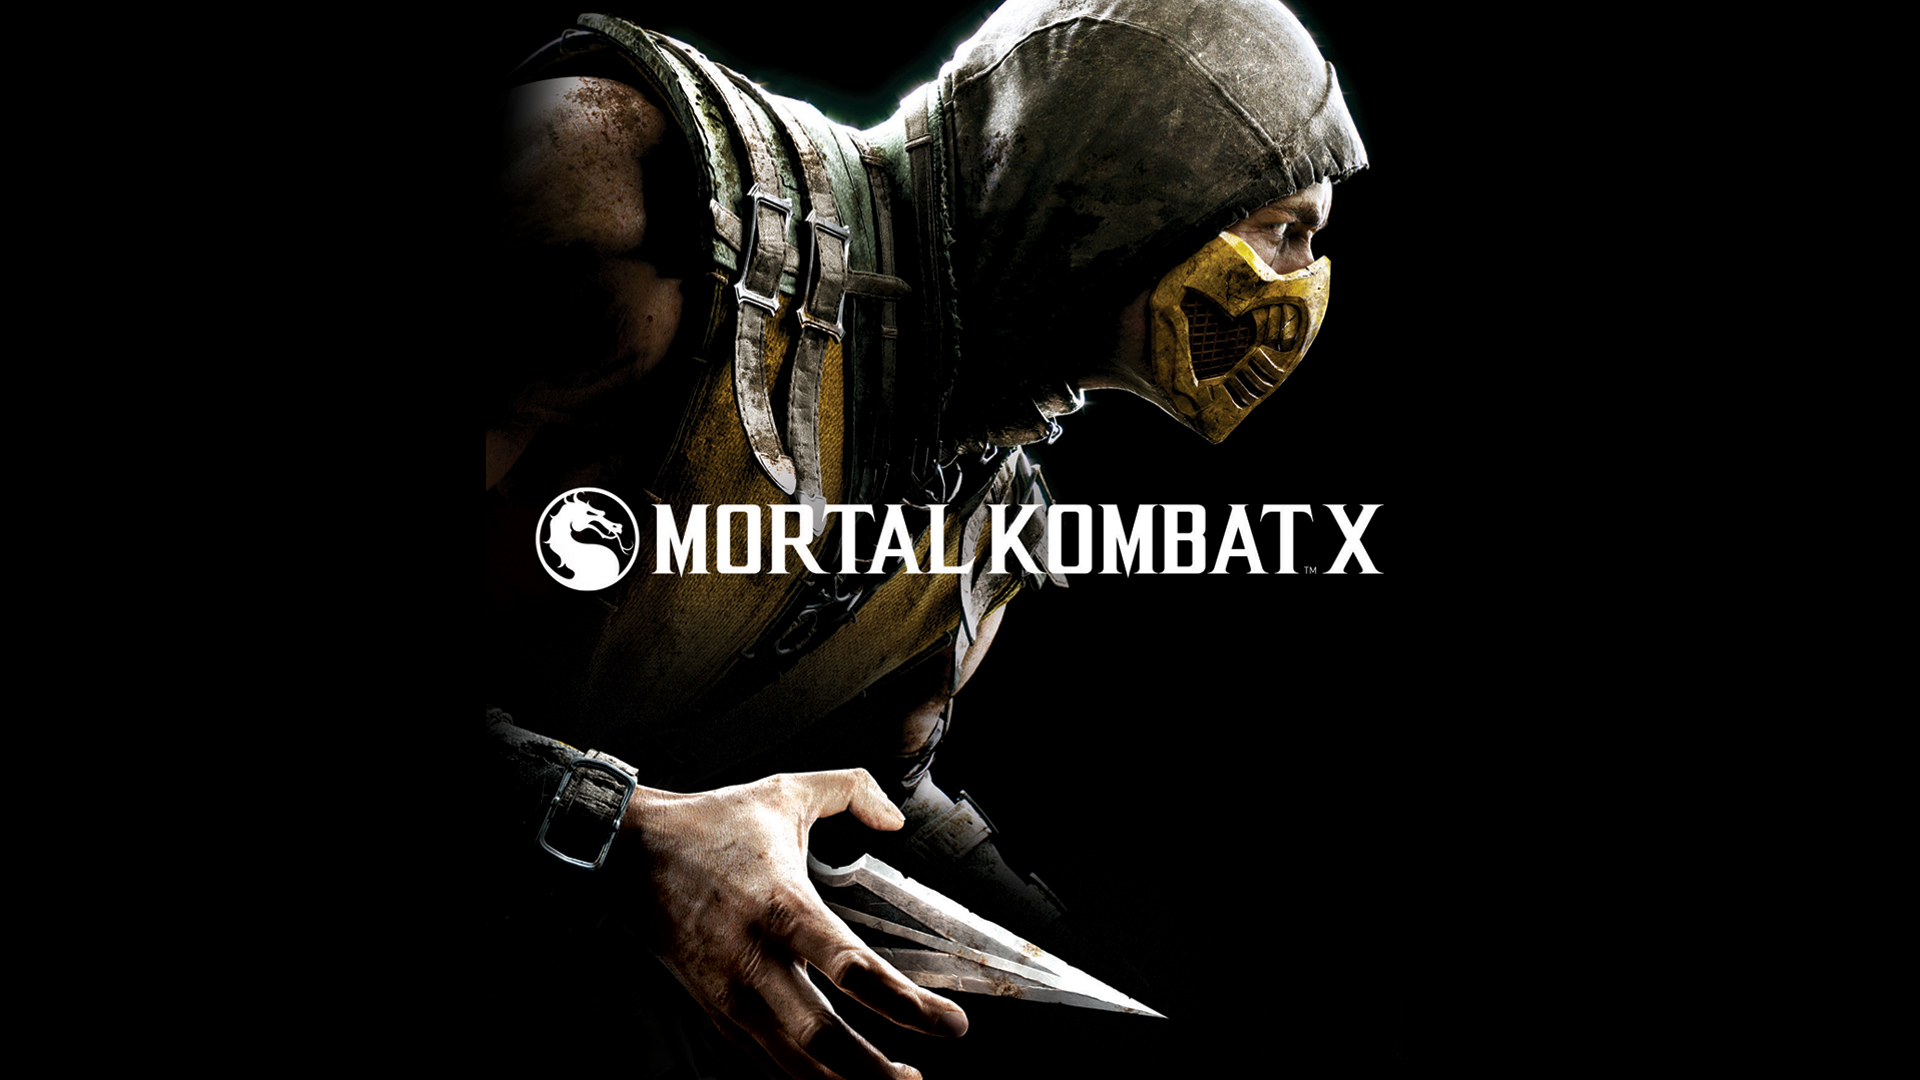 Mortal Kombat X Wallpaper 1080p On